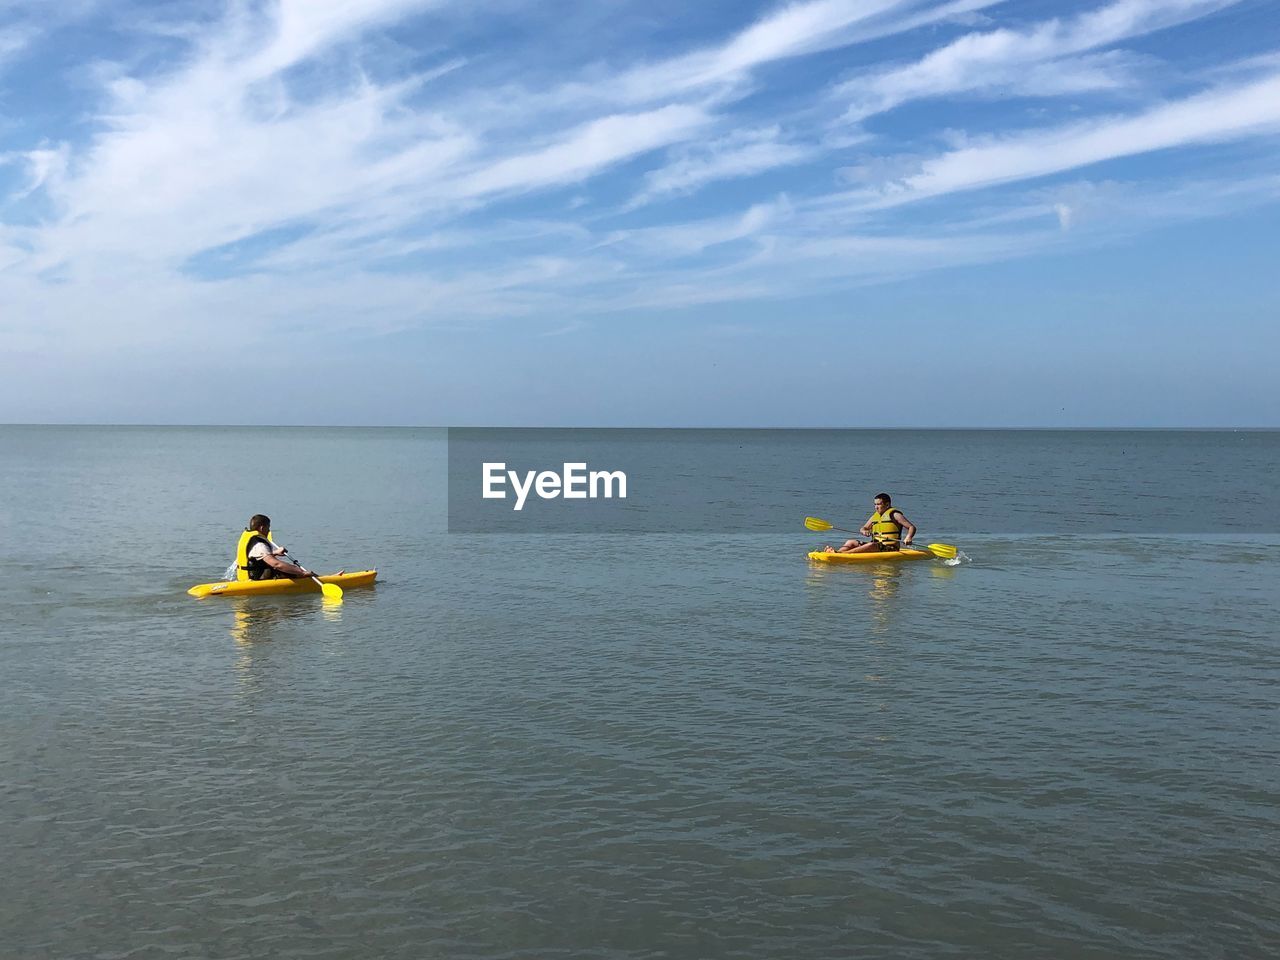 Boys kayaking on sea against sky